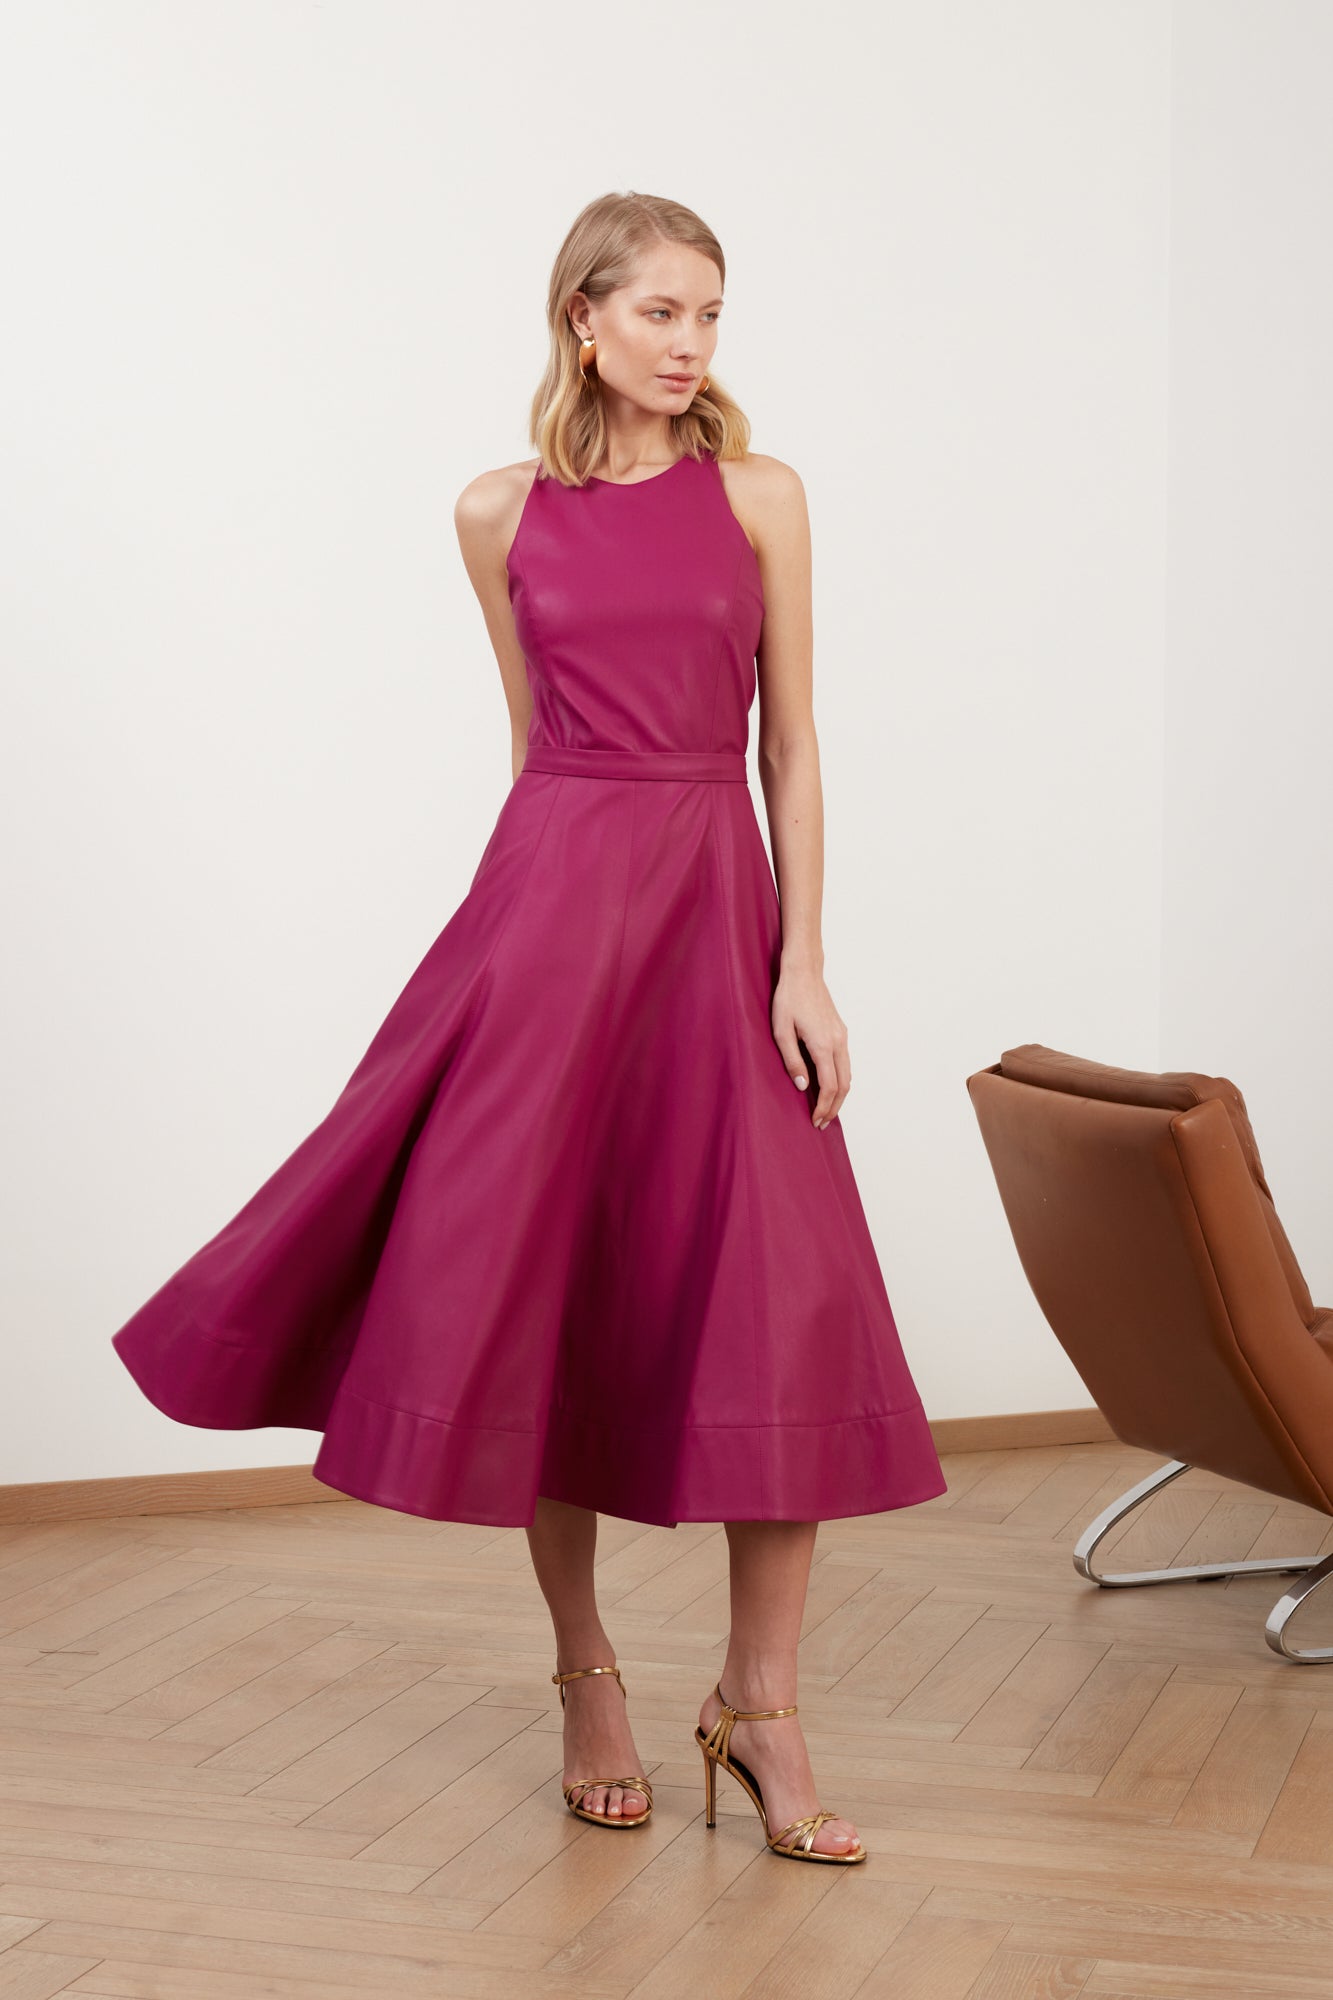 Shop Undress Avalon Fuchsia Pink Faux Leather Cocktail Dress